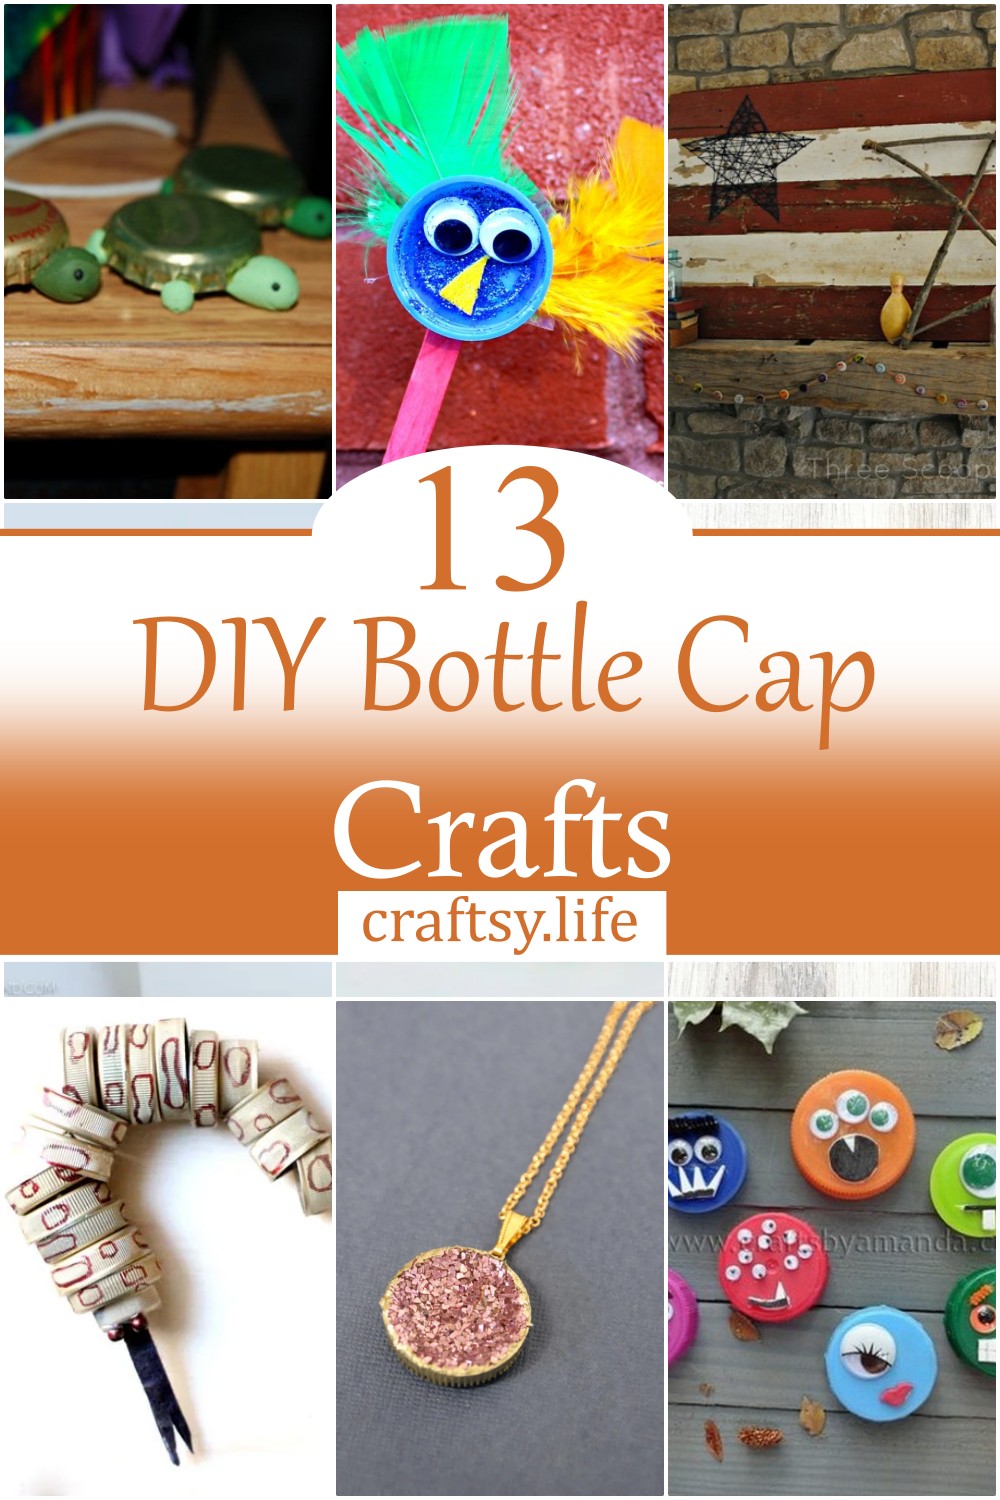 DIY Bottle Cap Crafts 2